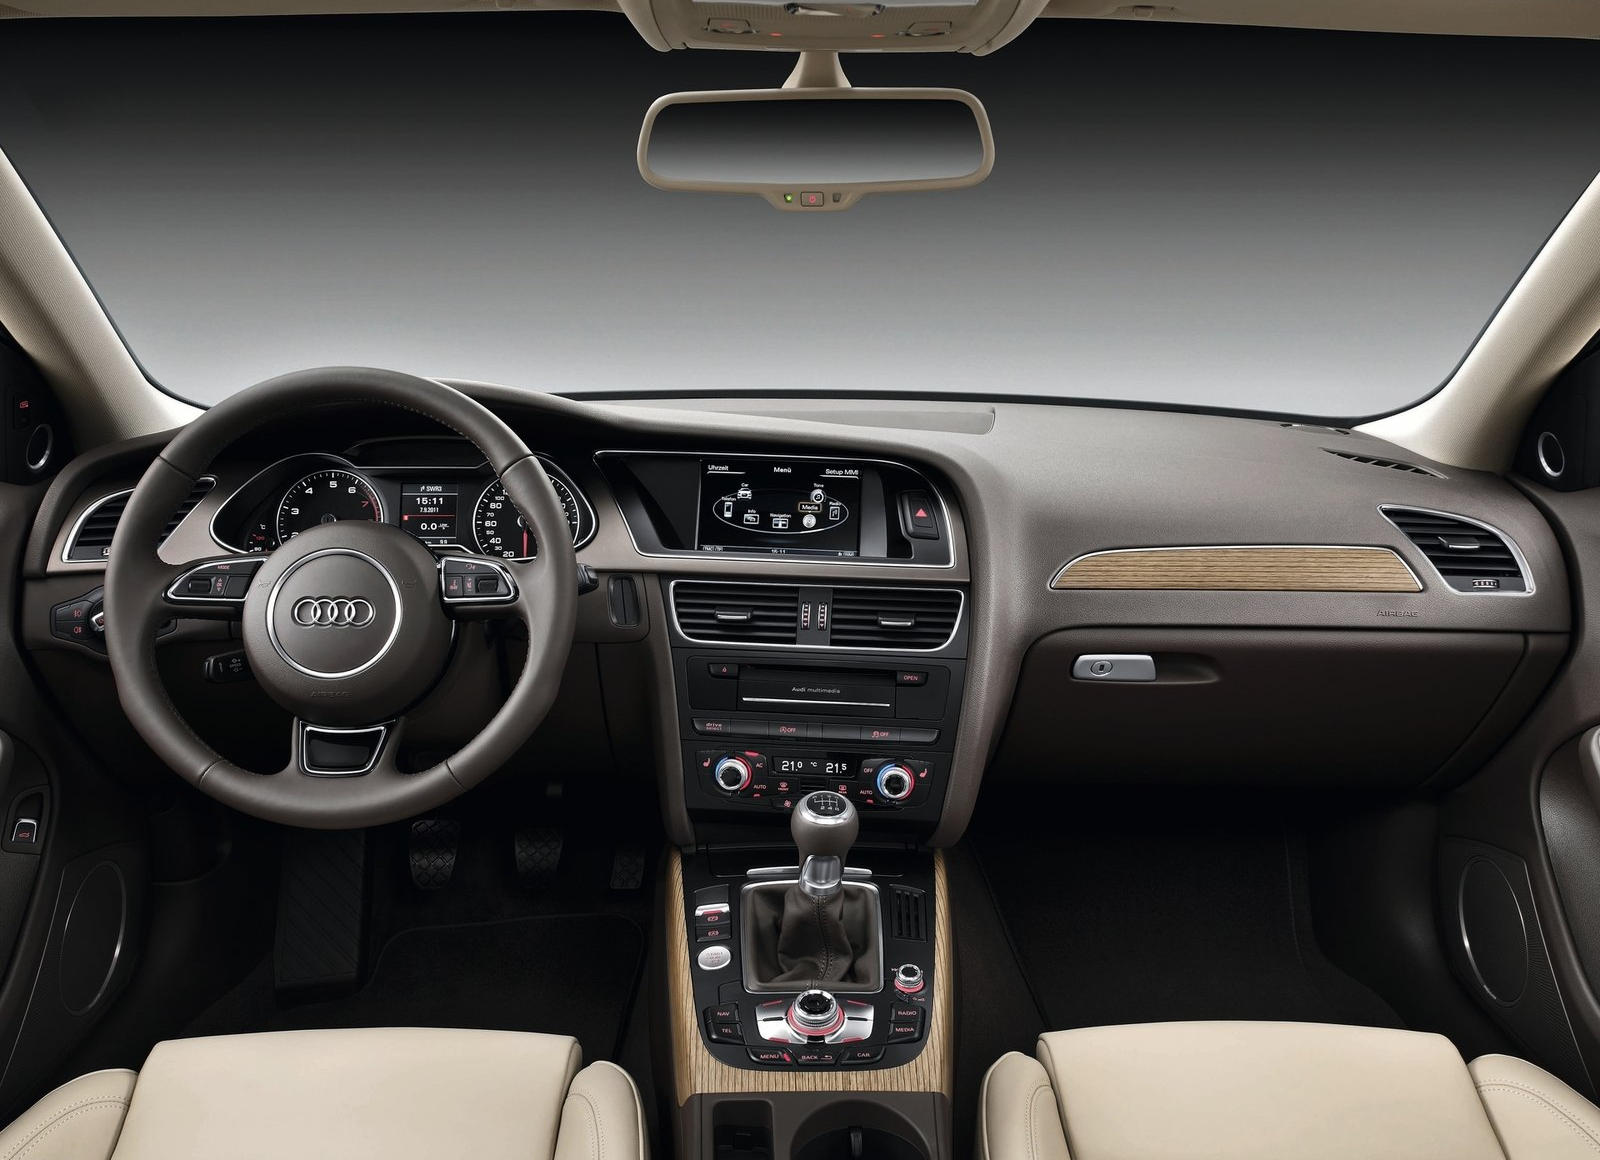 2015 Audi A4 Sedan Dashboard